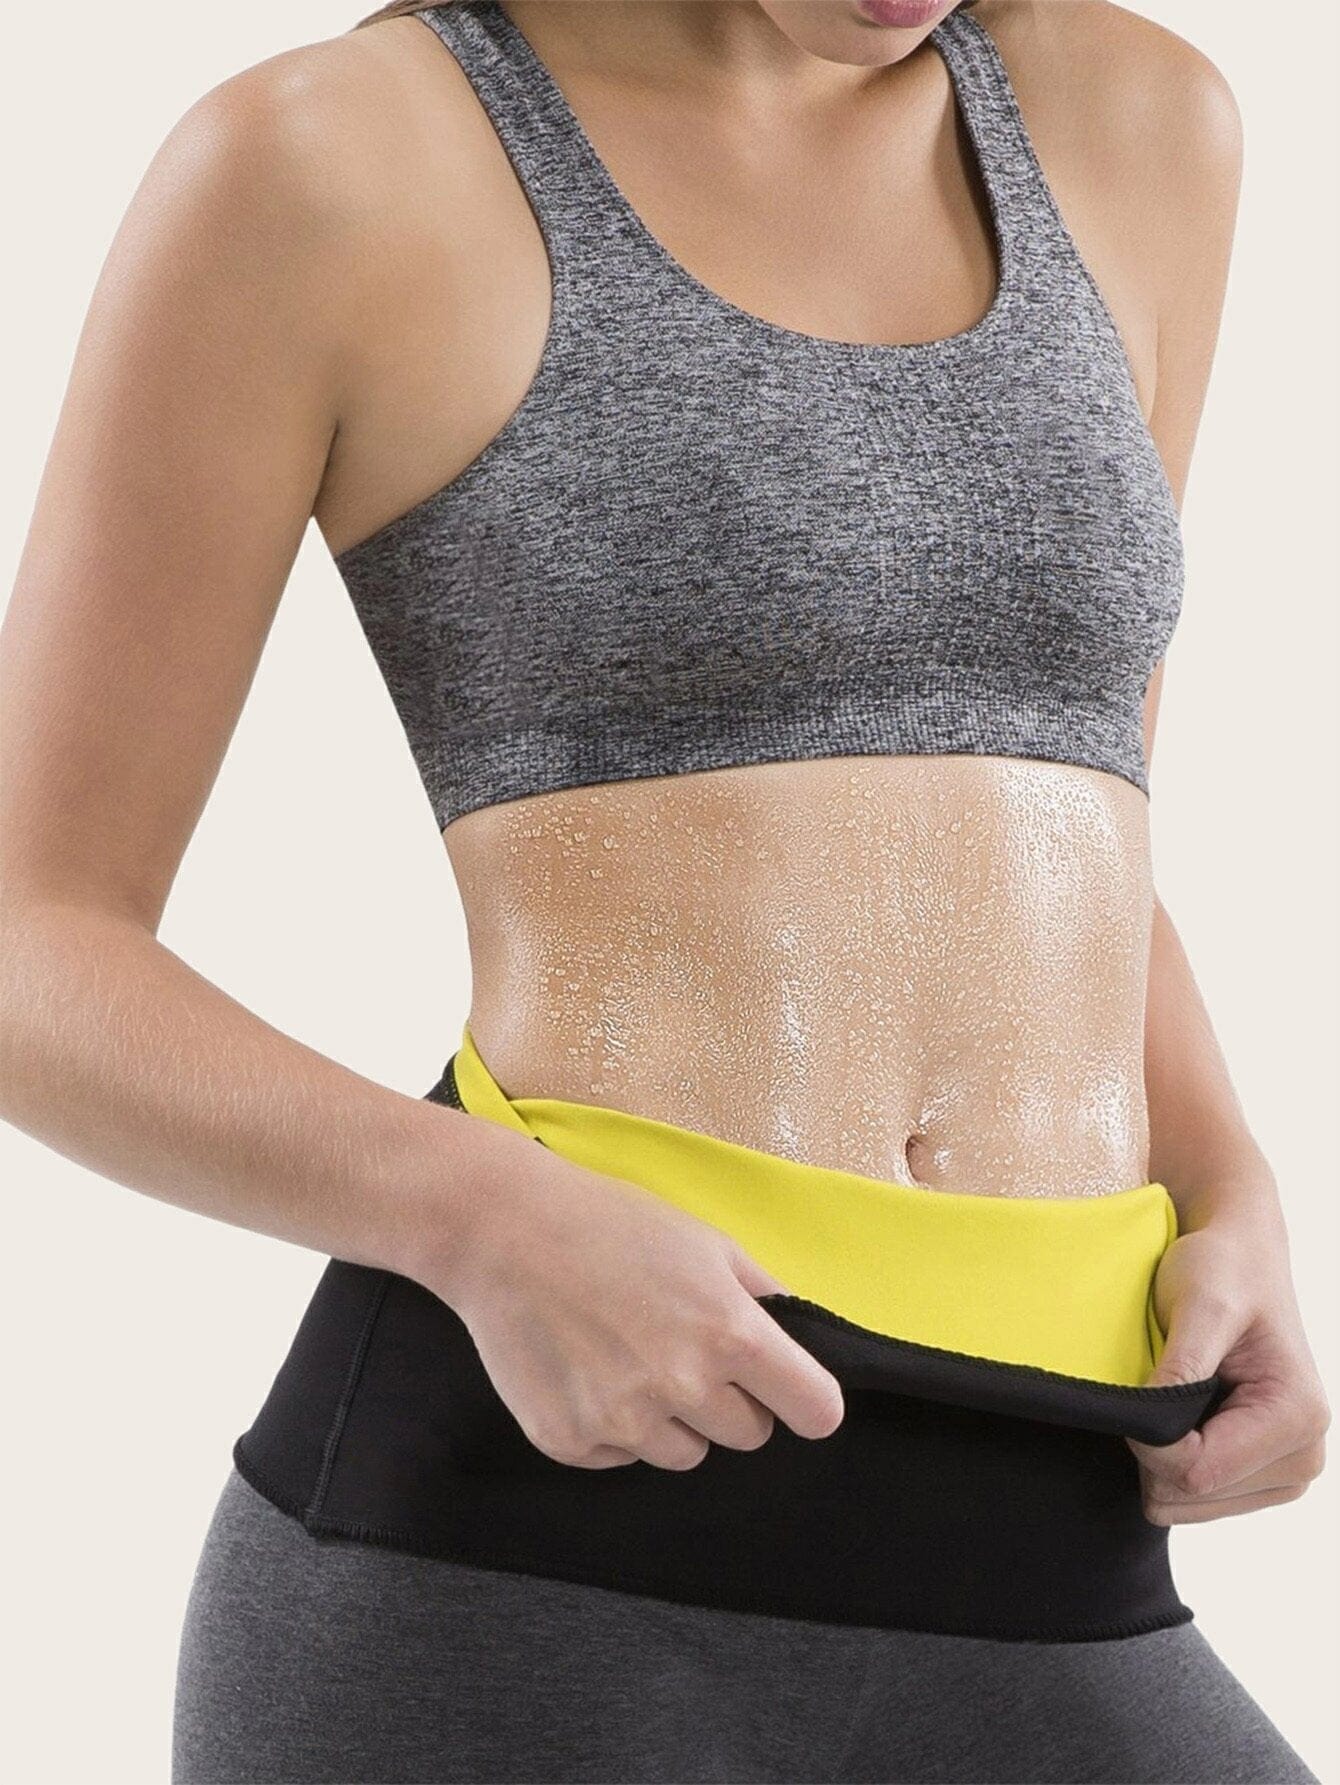 Unisex Body Shaper Hot Sweat Slimming Shaper Belt (Pack of 2) Waist Cinchers Unisex Sweat Shaper - Buy 1, Get 1 FREE! Zaavio®